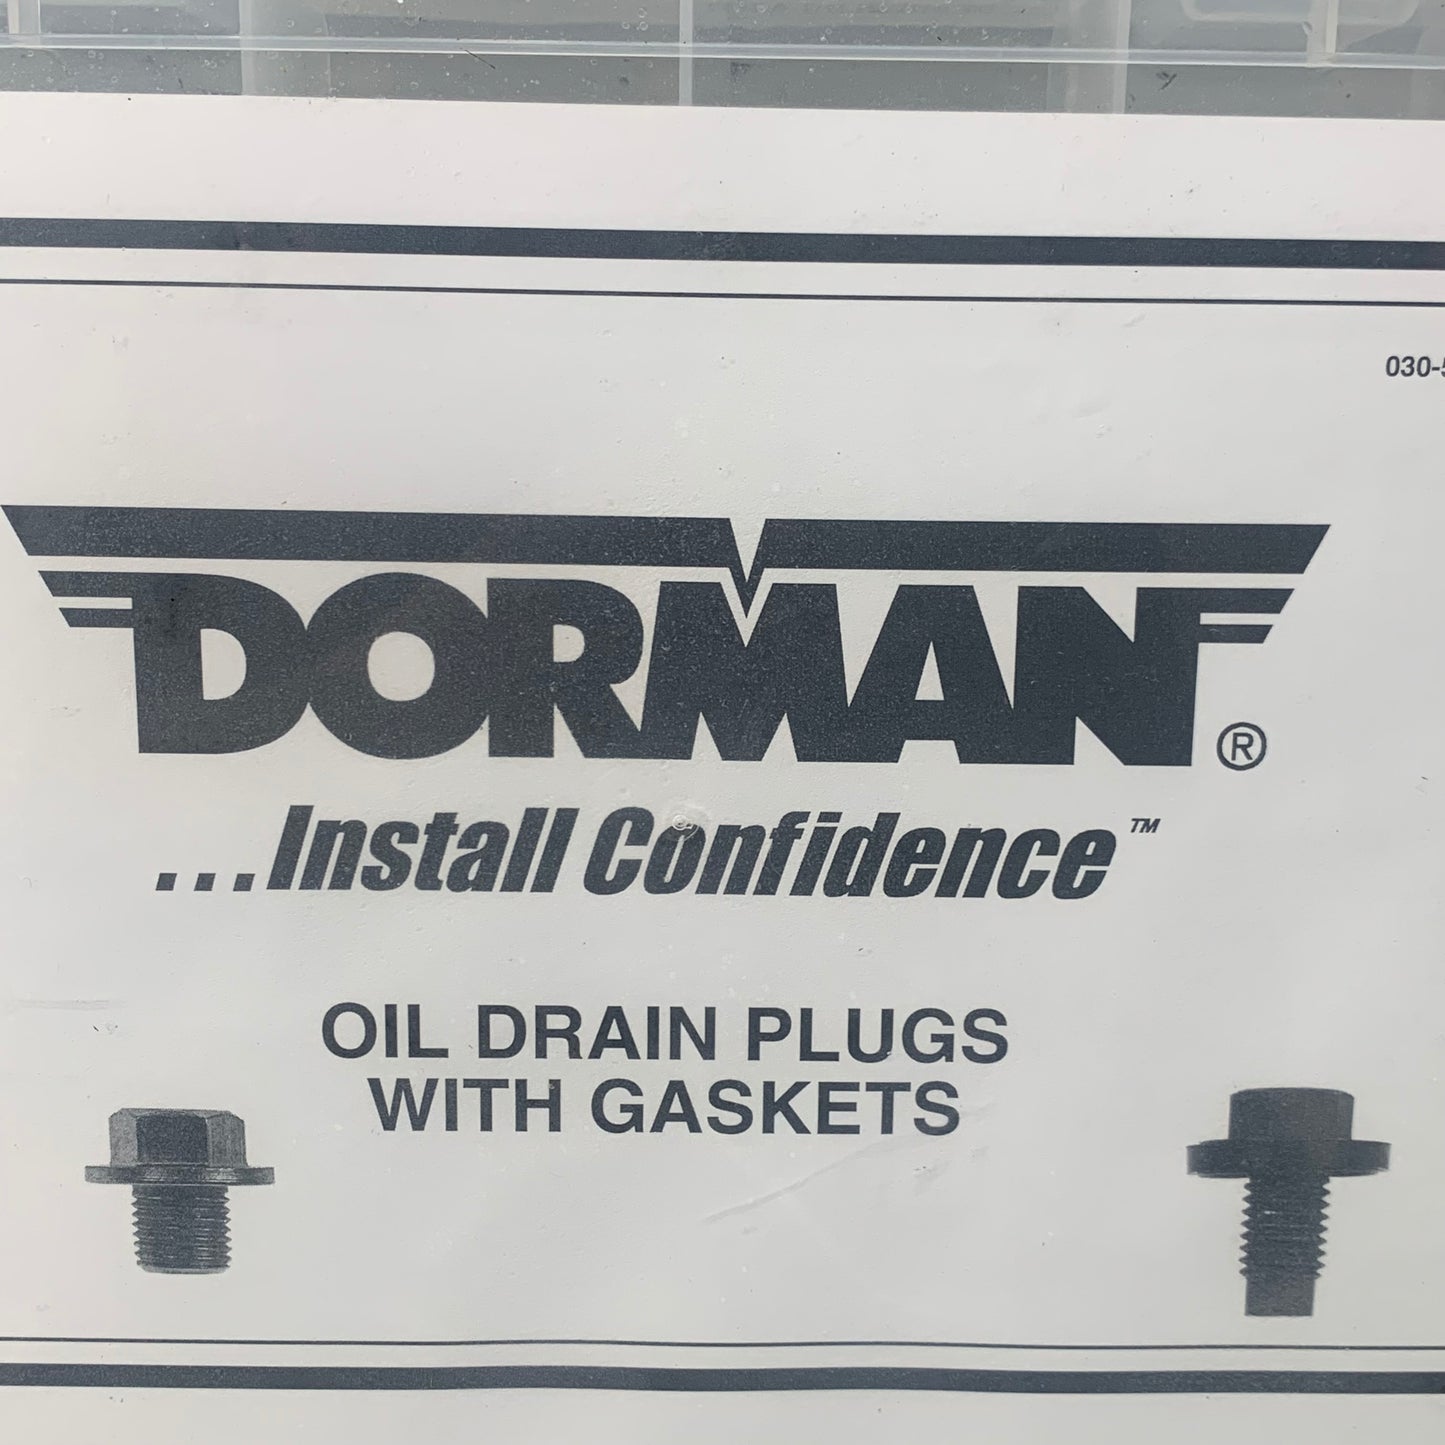 DORMAN Oil Pan Drain Plug Assortments & Gaskets 030-539